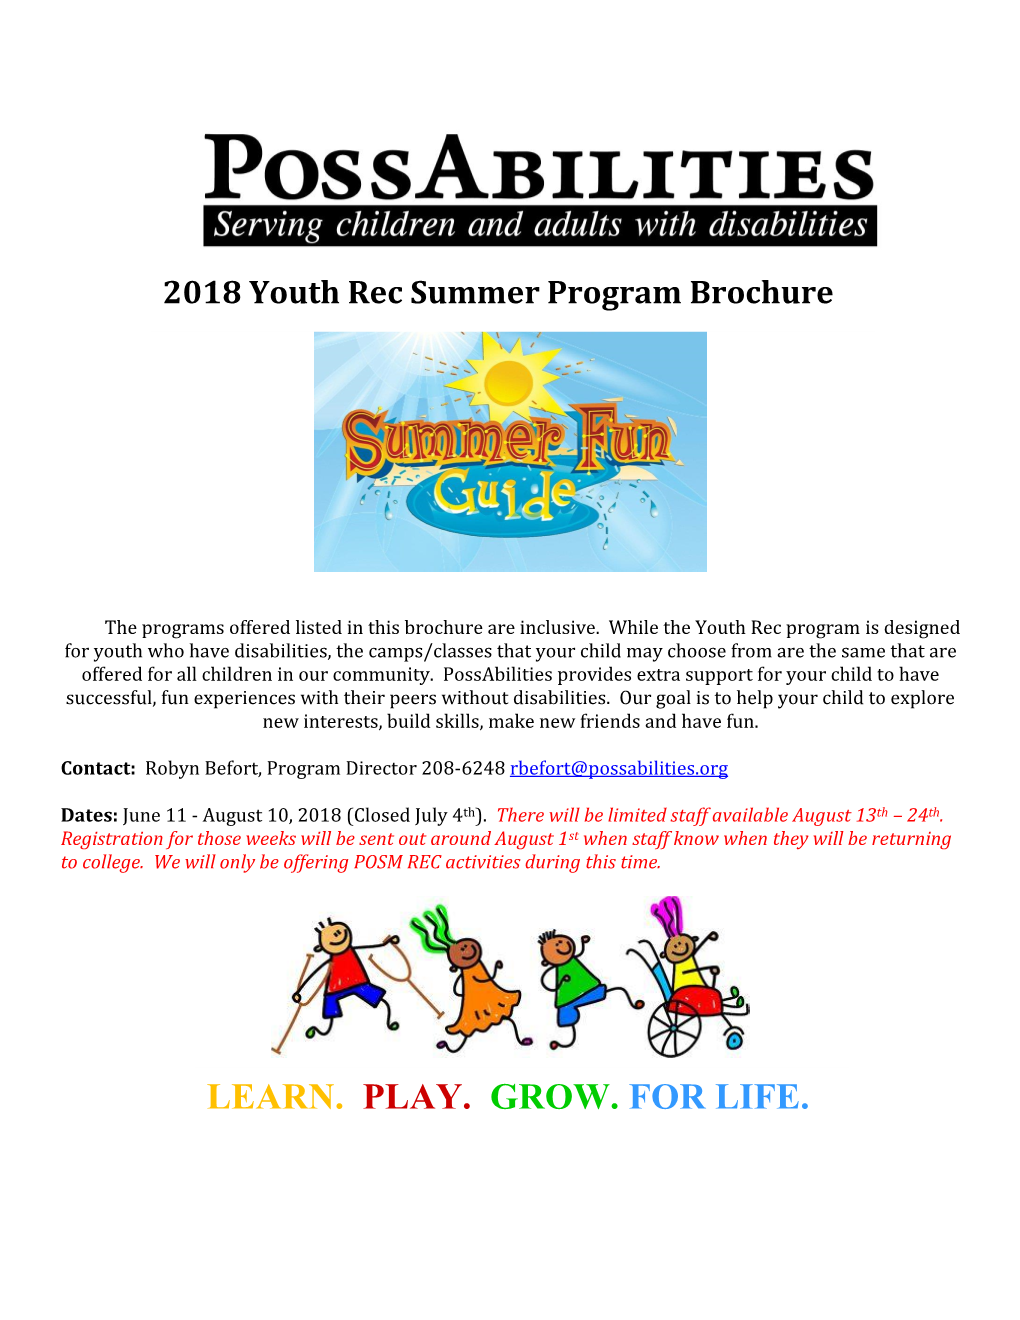 Possabilities Summer Youth Recreation Program